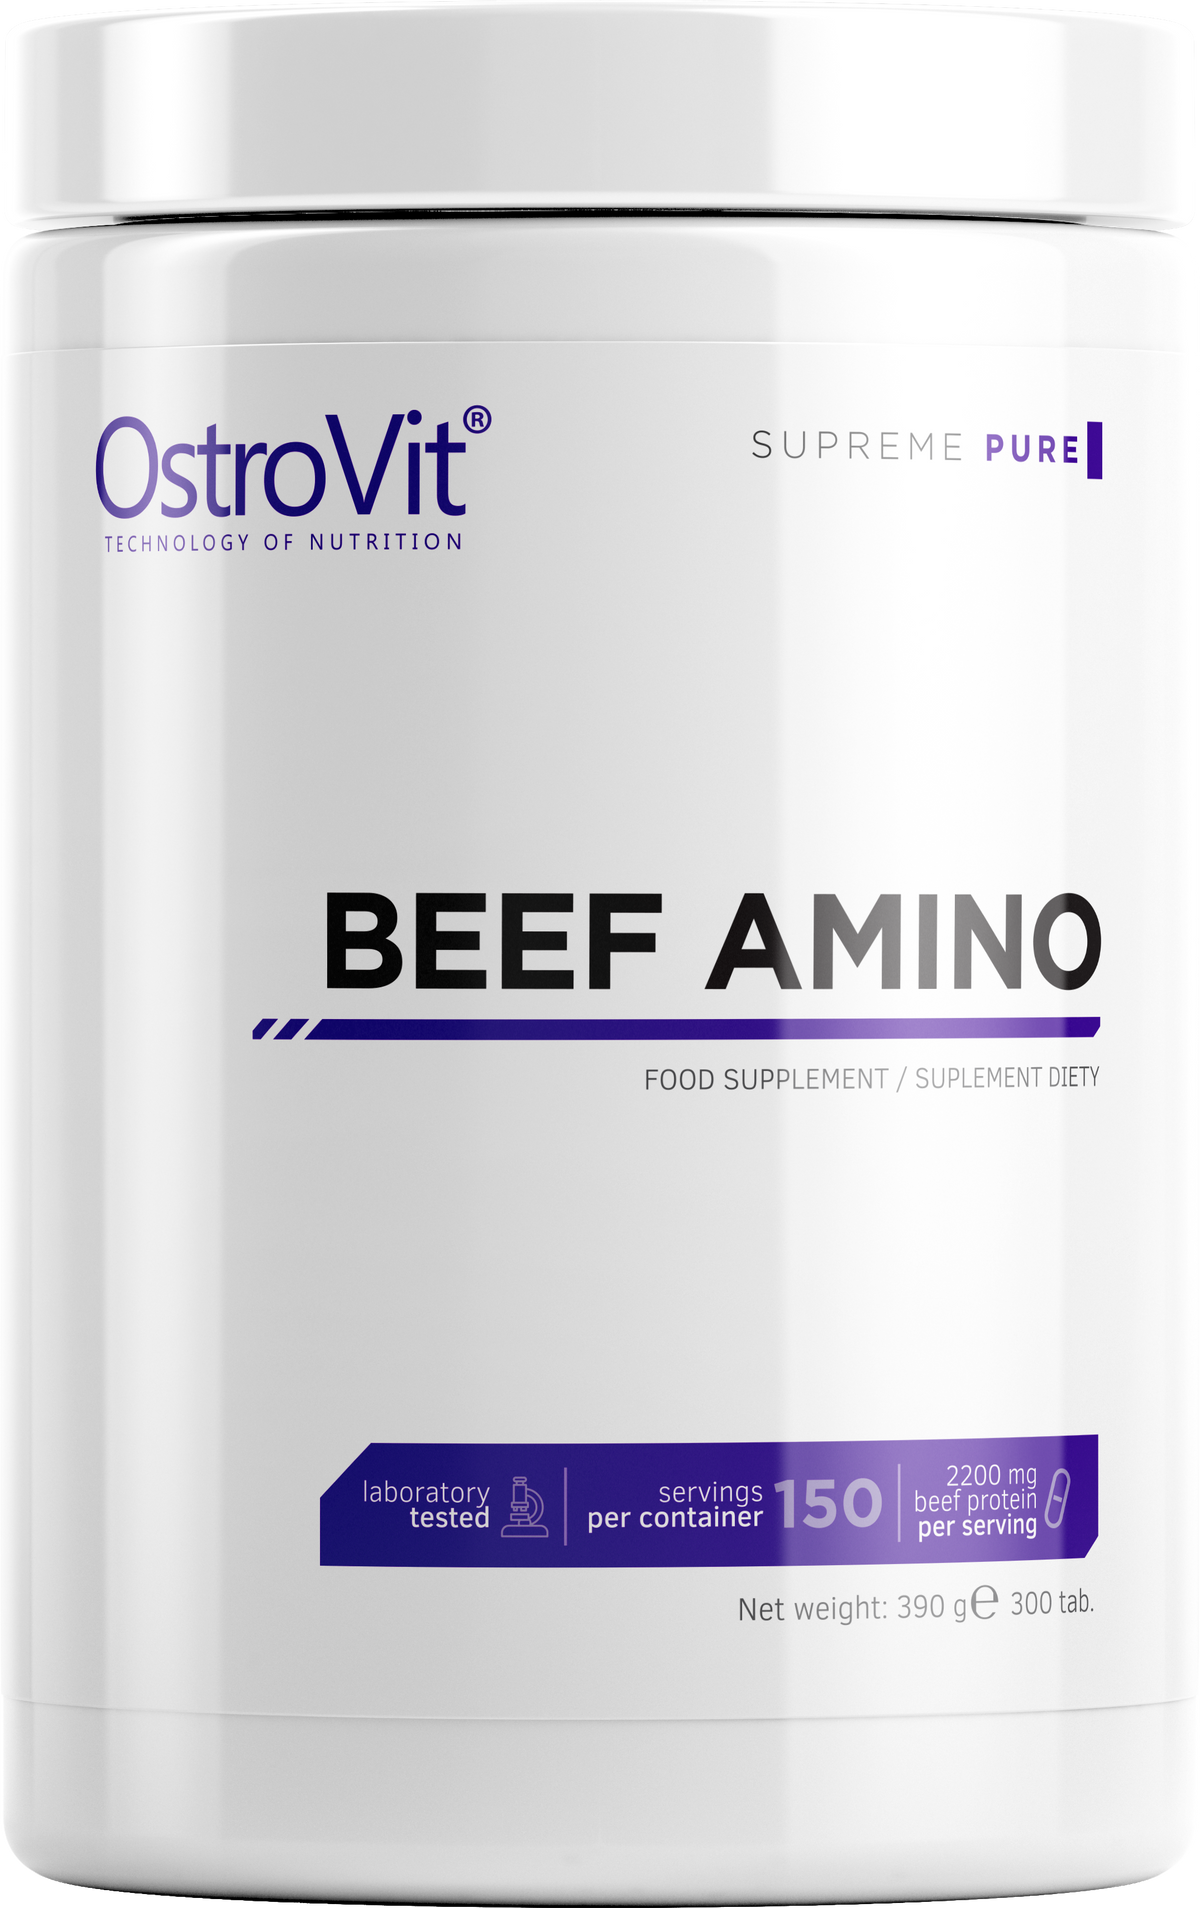 Beef Amino Supreme Pure - BadiZdrav.BG